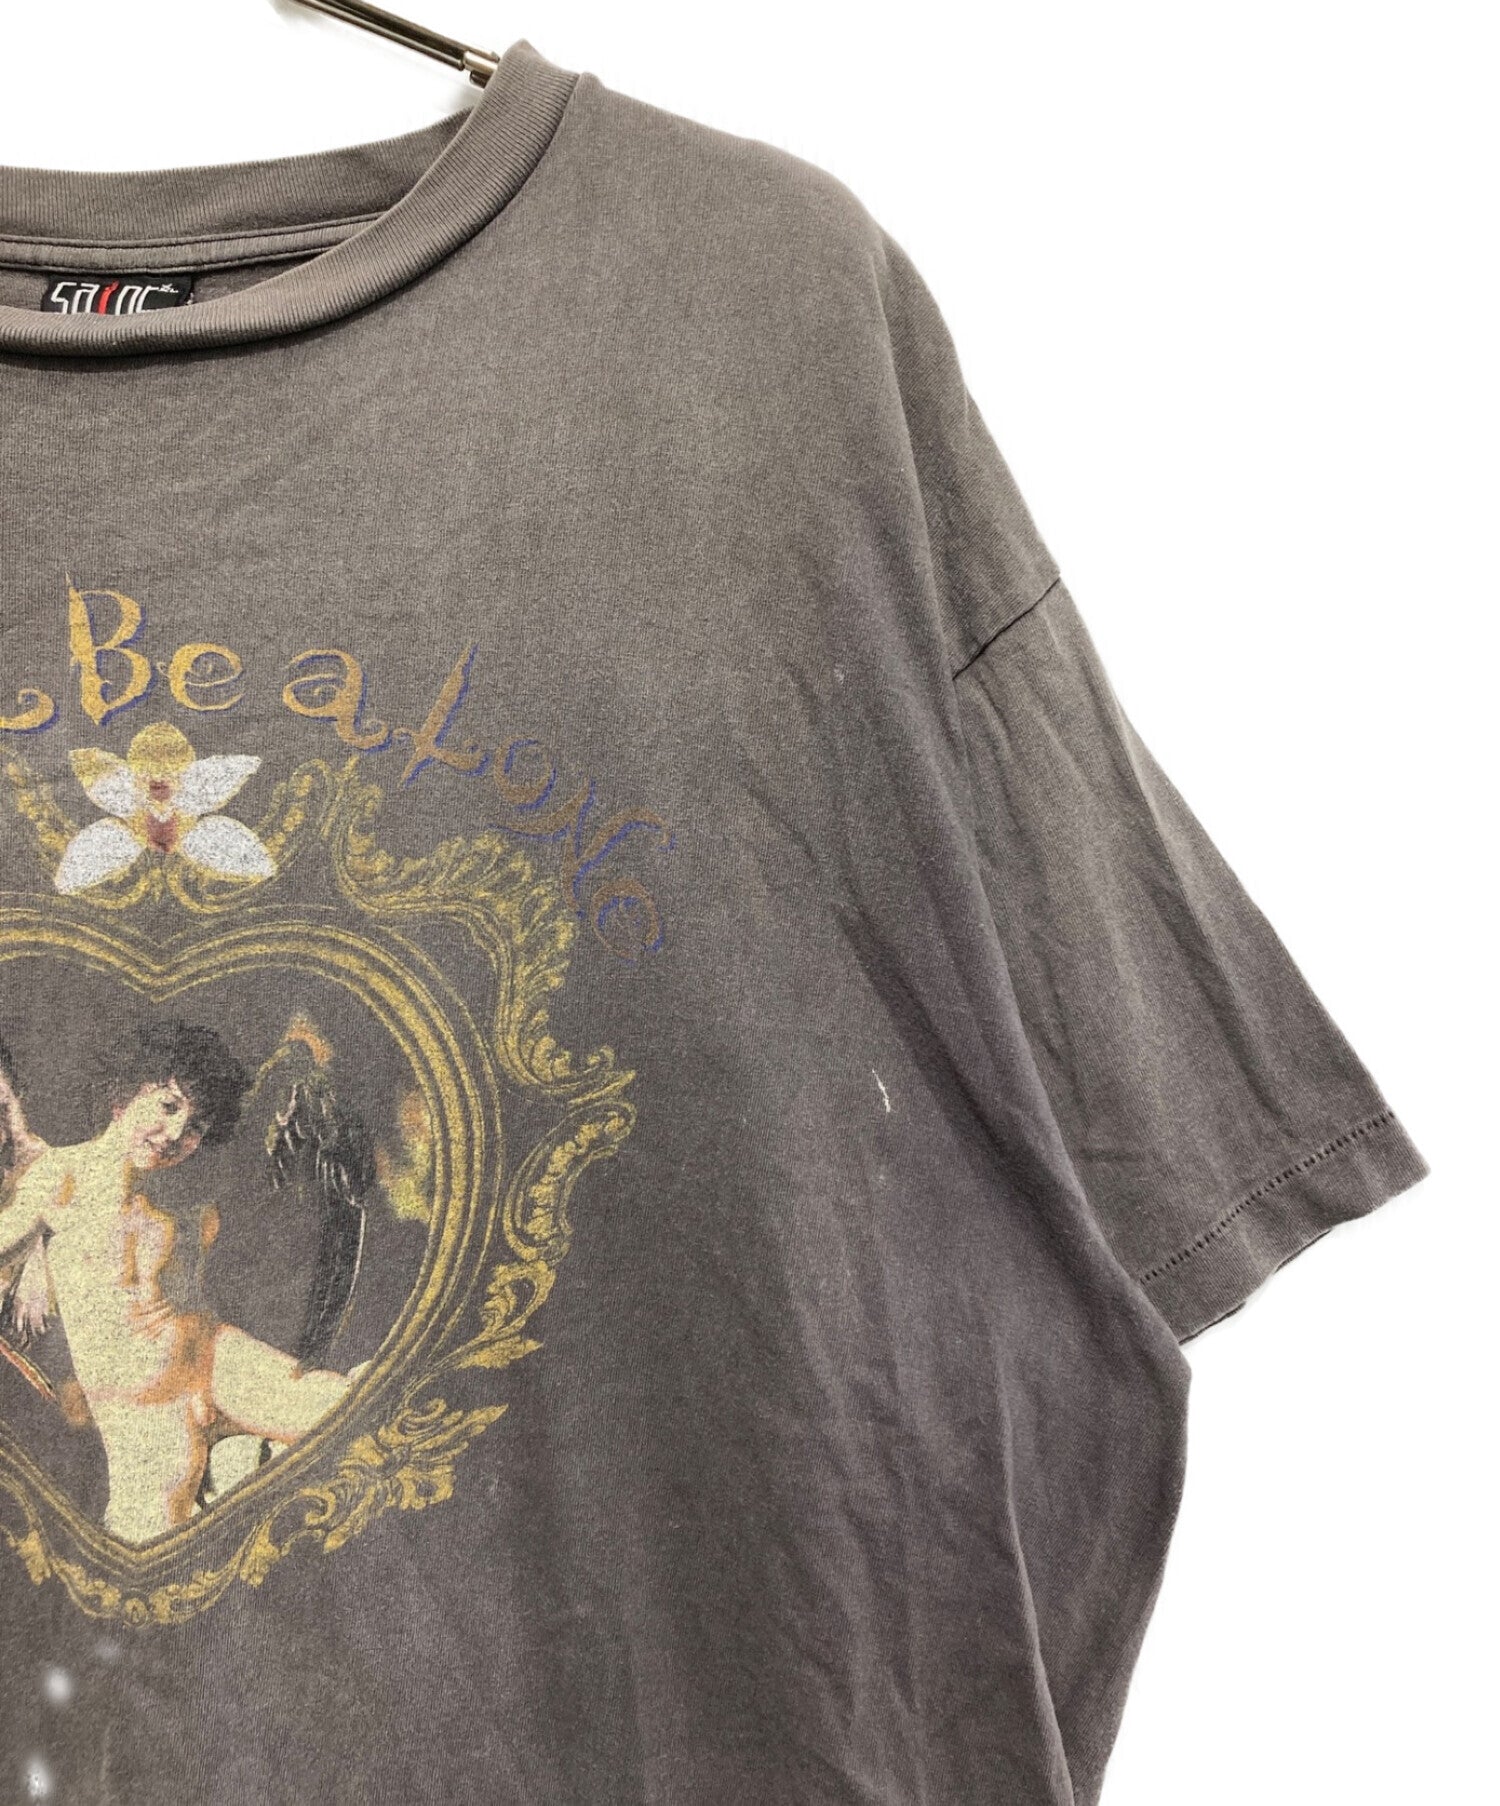 Crazyyy Louis Vuitton NBA Collab T-Shirt, This Tee